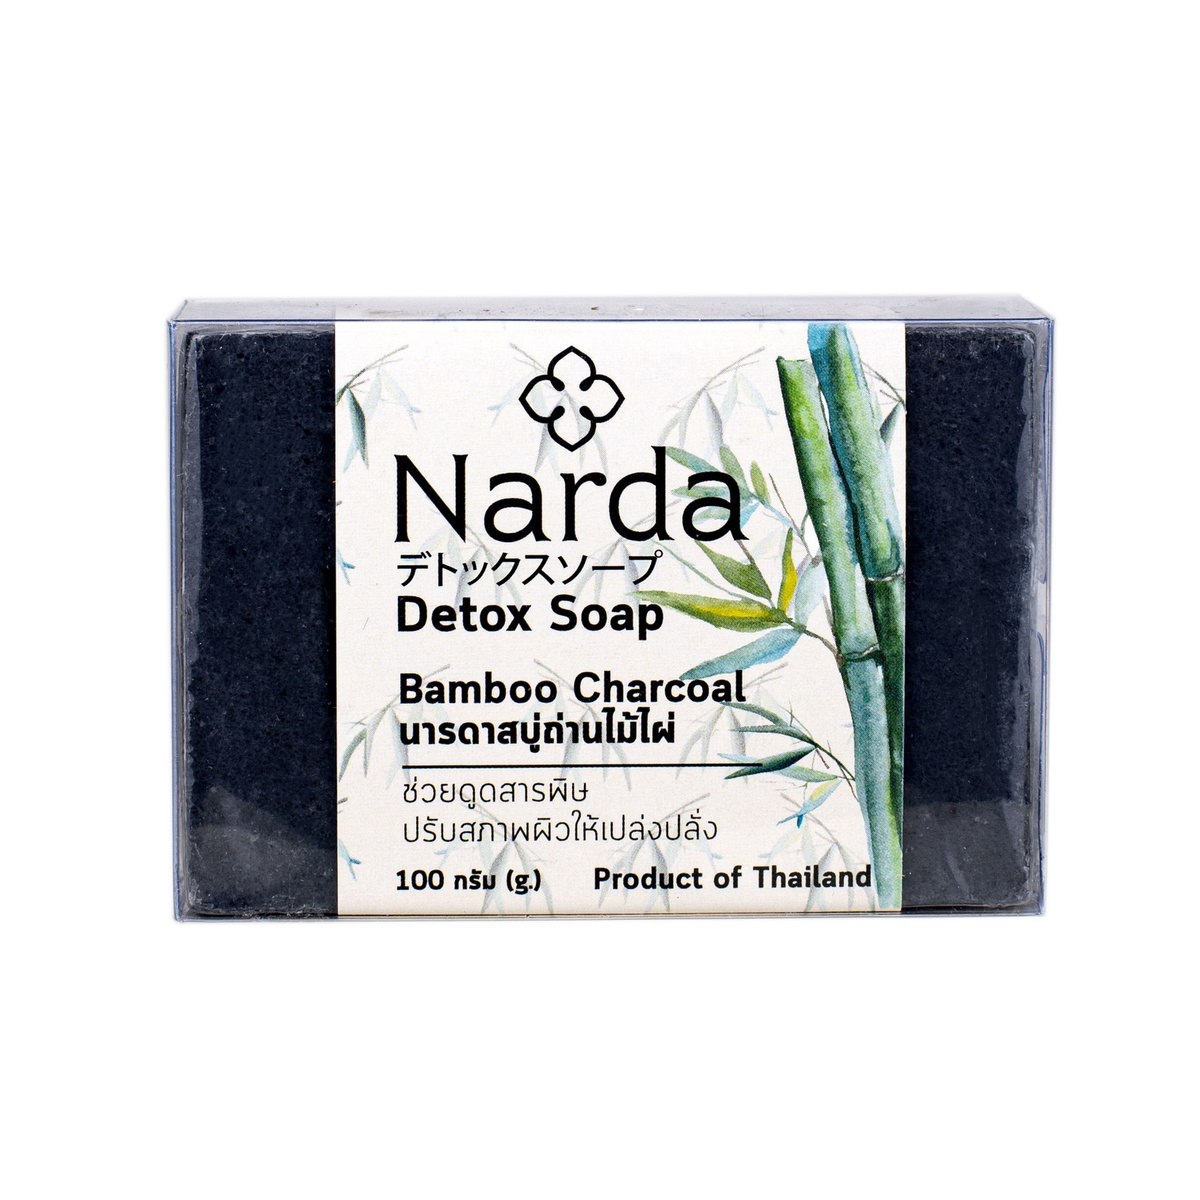 Detox Soap BAMBOO CHARCOAL, Narda (Увлажняющее мыло КОКОСОВОЕ МАСЛО, Нарда), 100 г.